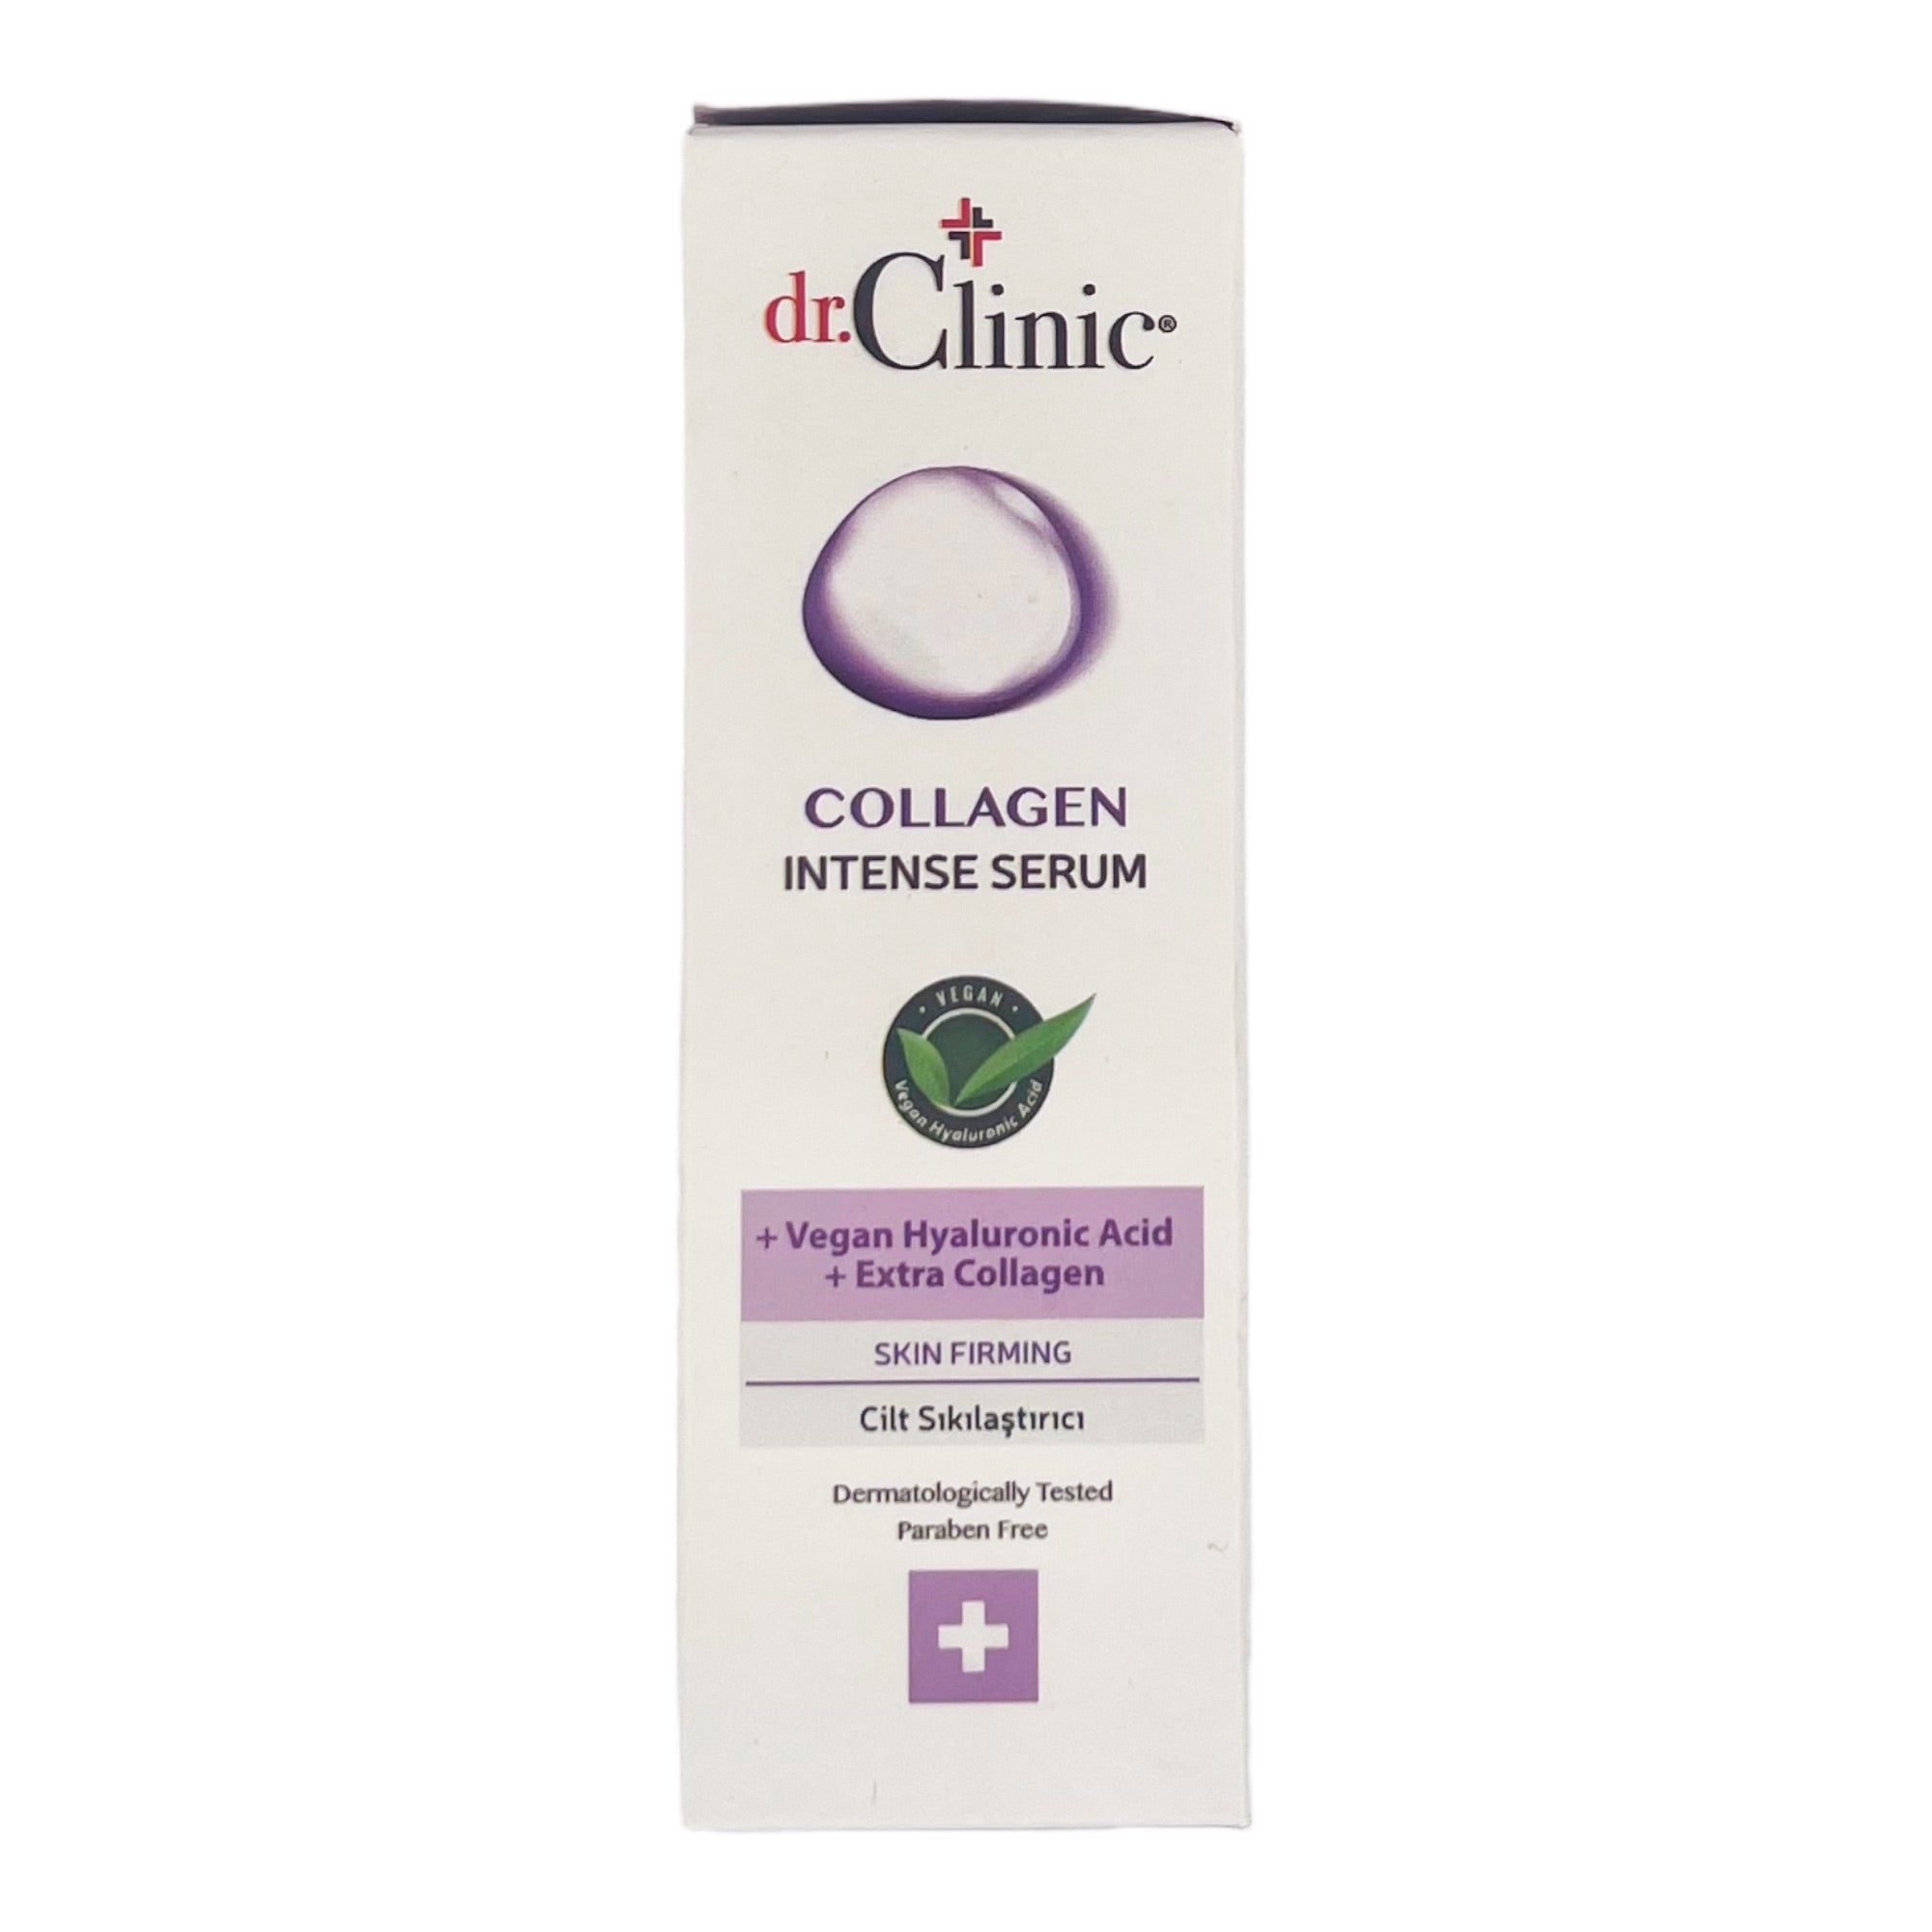 Dr.Clinic - Collagen Intense Serum 30ml - Eson Direct